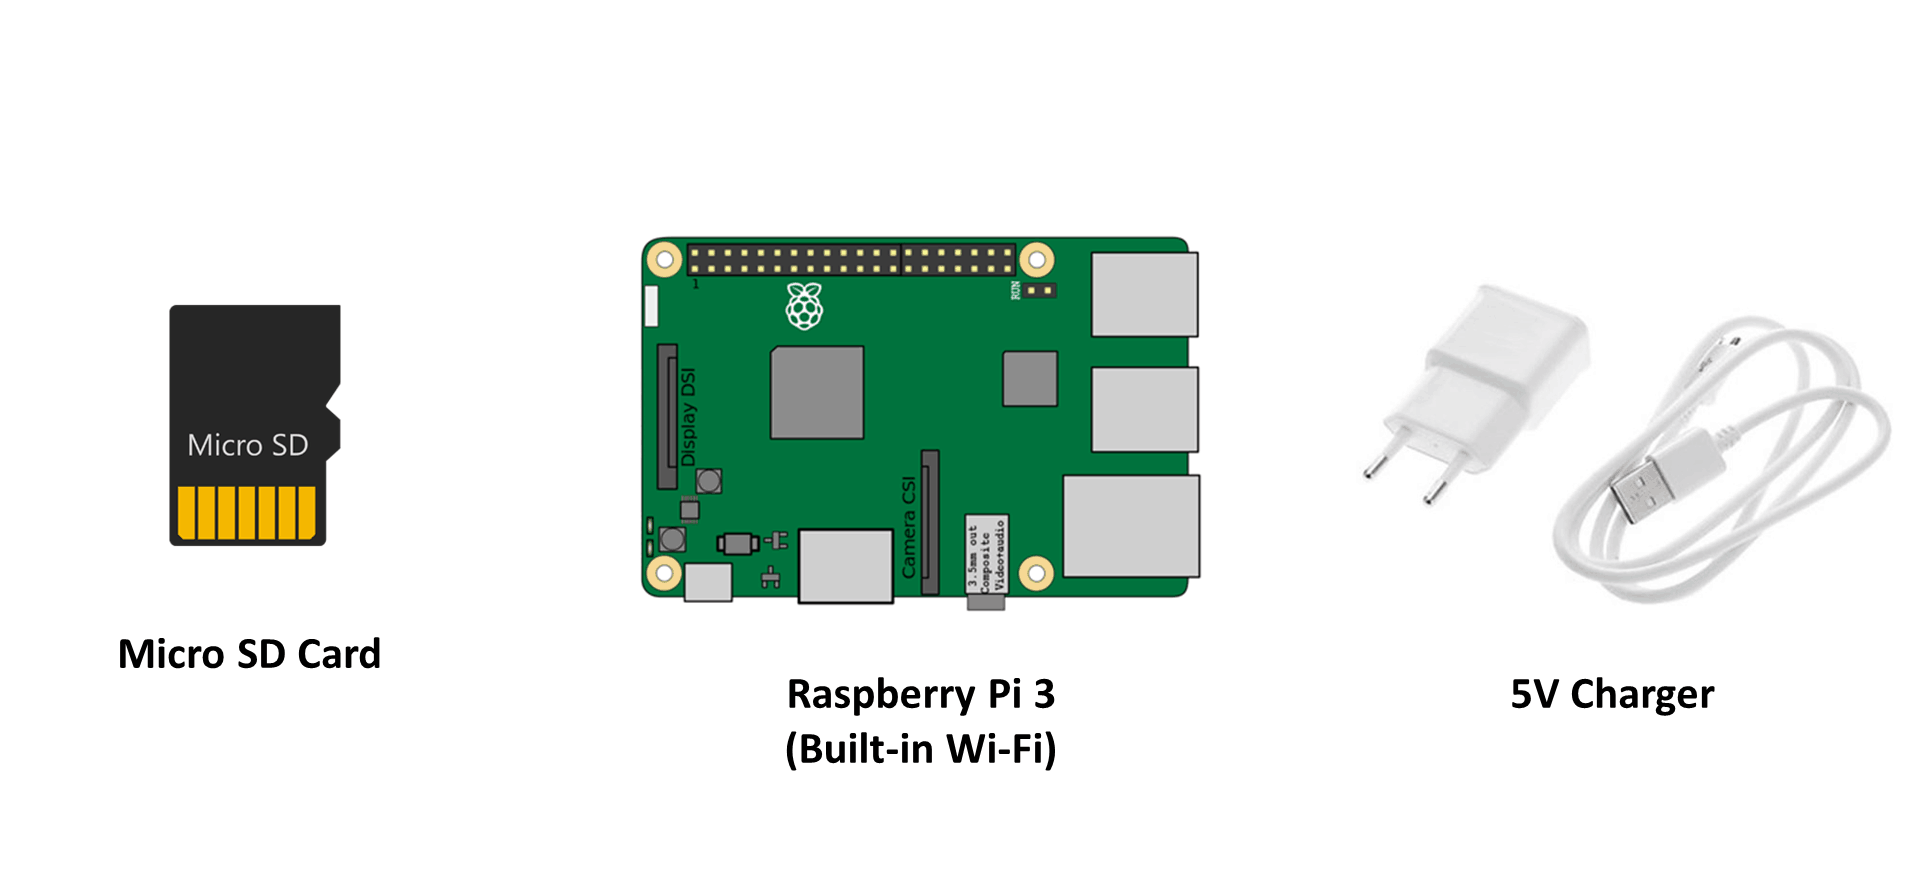 Setting Up the Raspberry Pi 3